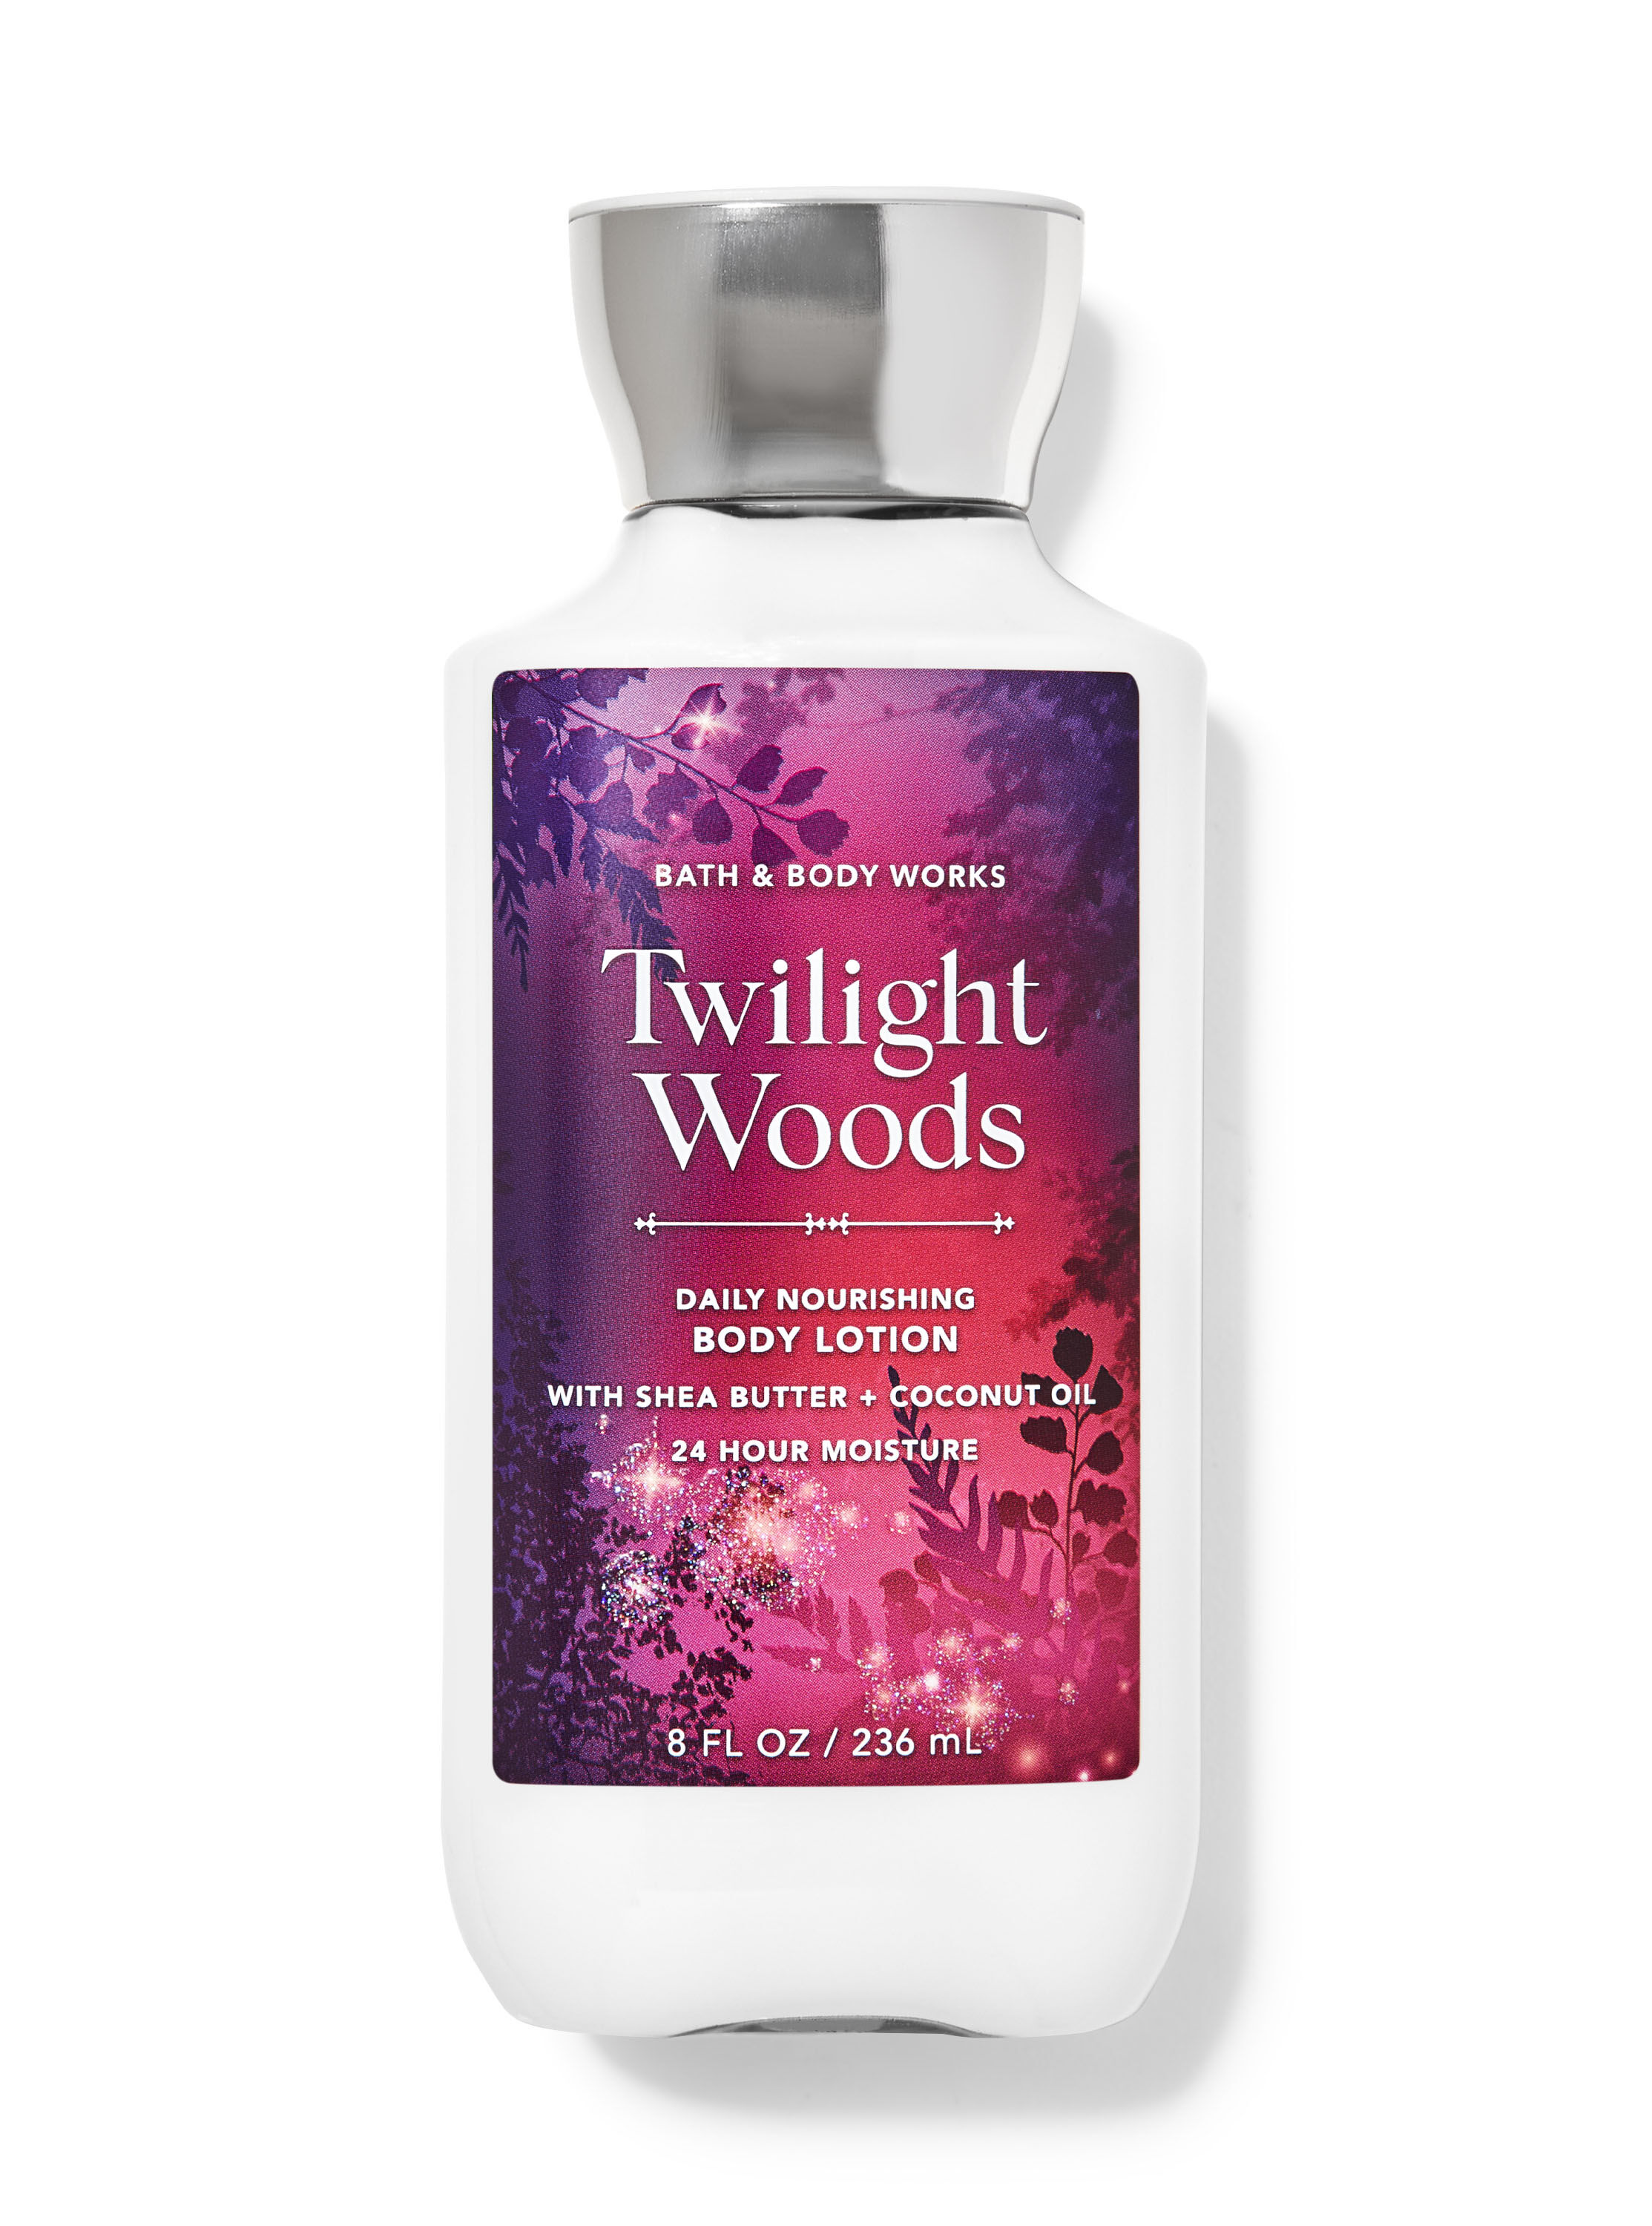 Twilight Woods Daily Nourishing Body Lotion